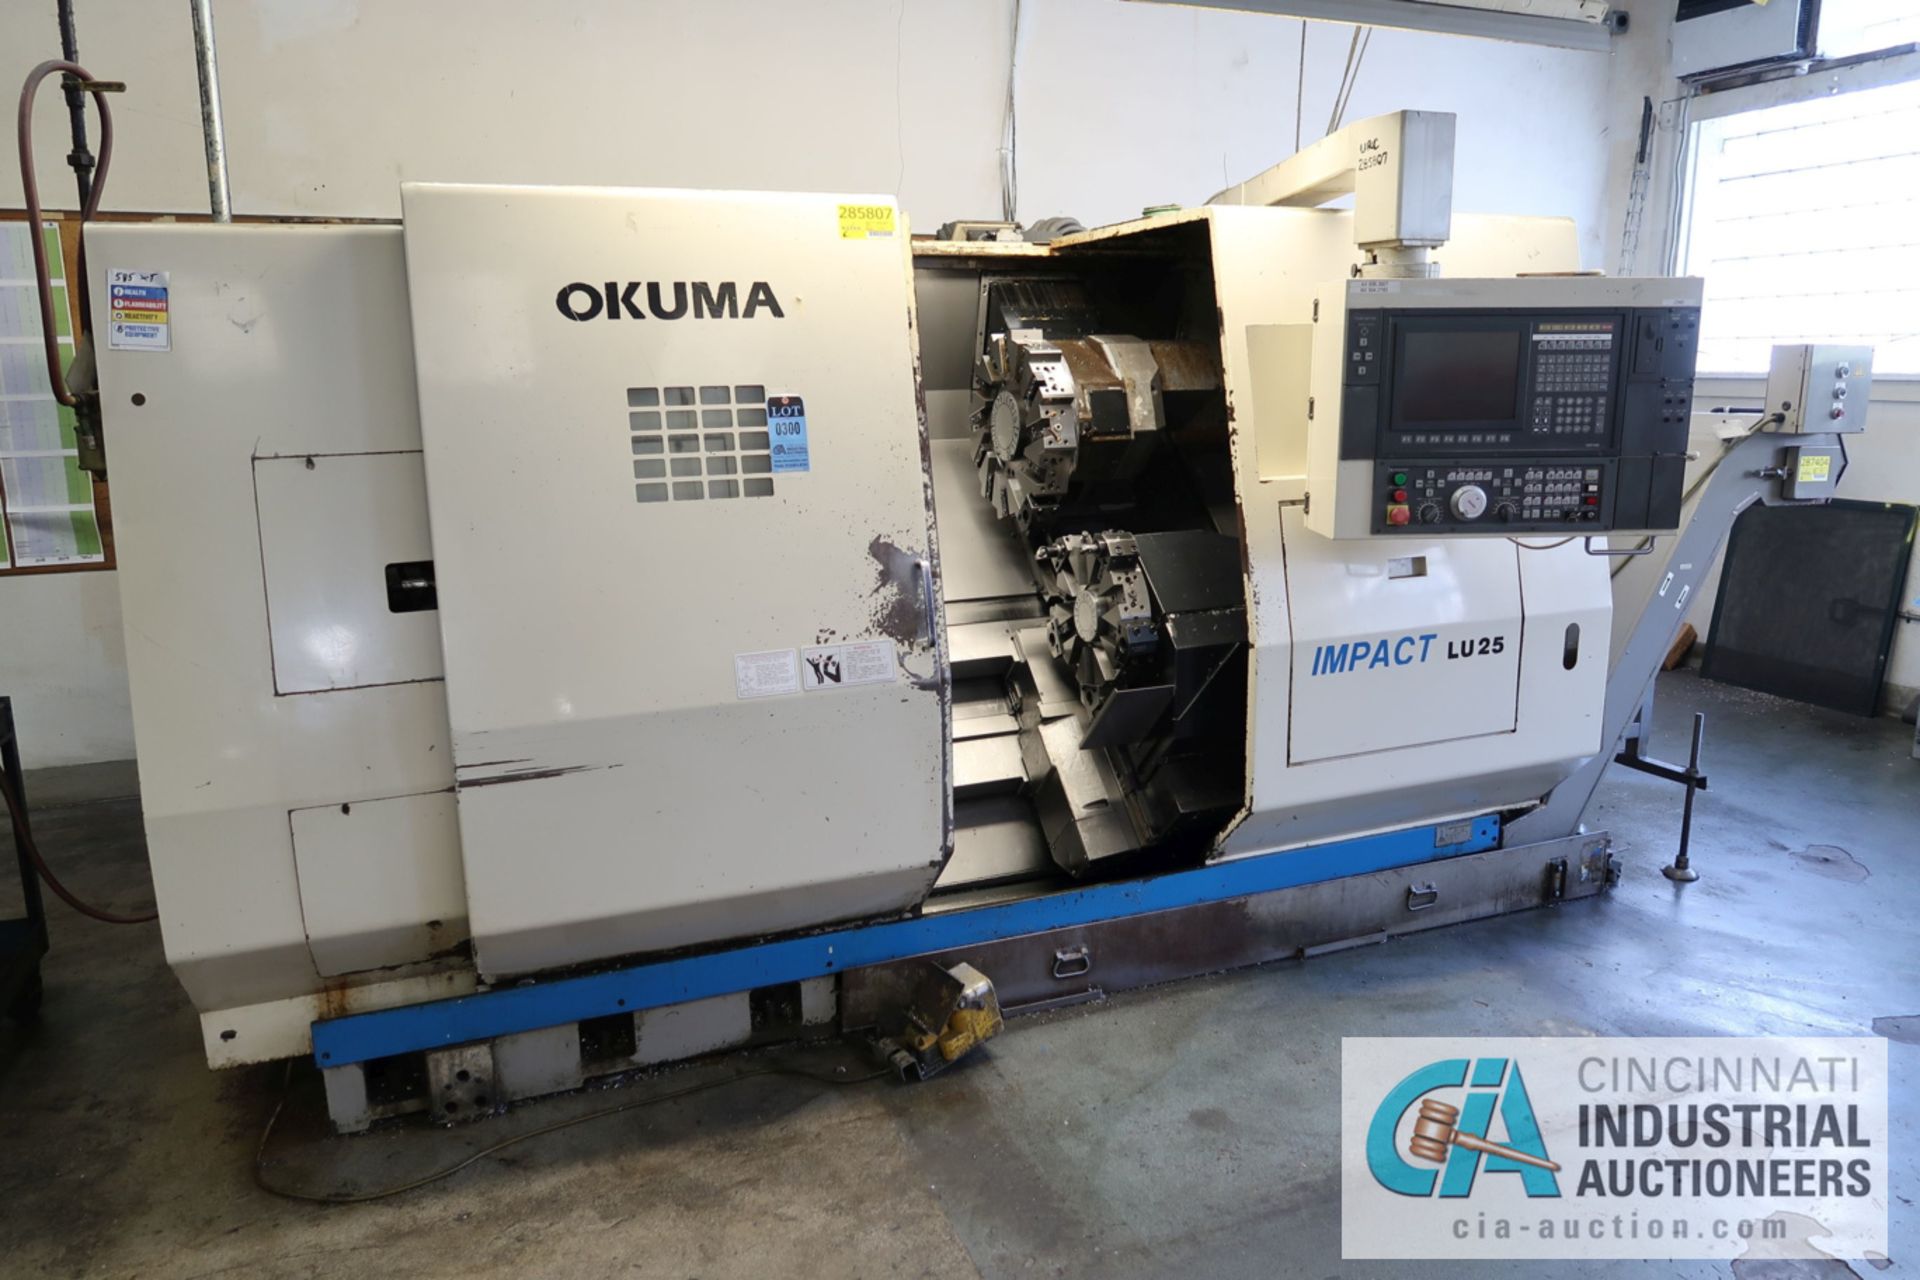 OKUMA MODEL IMPACT LU25 CNC TURNING CENTER; S/N 0051, 26" SWING, 12-POSITION UPPER AND 10-POSITION